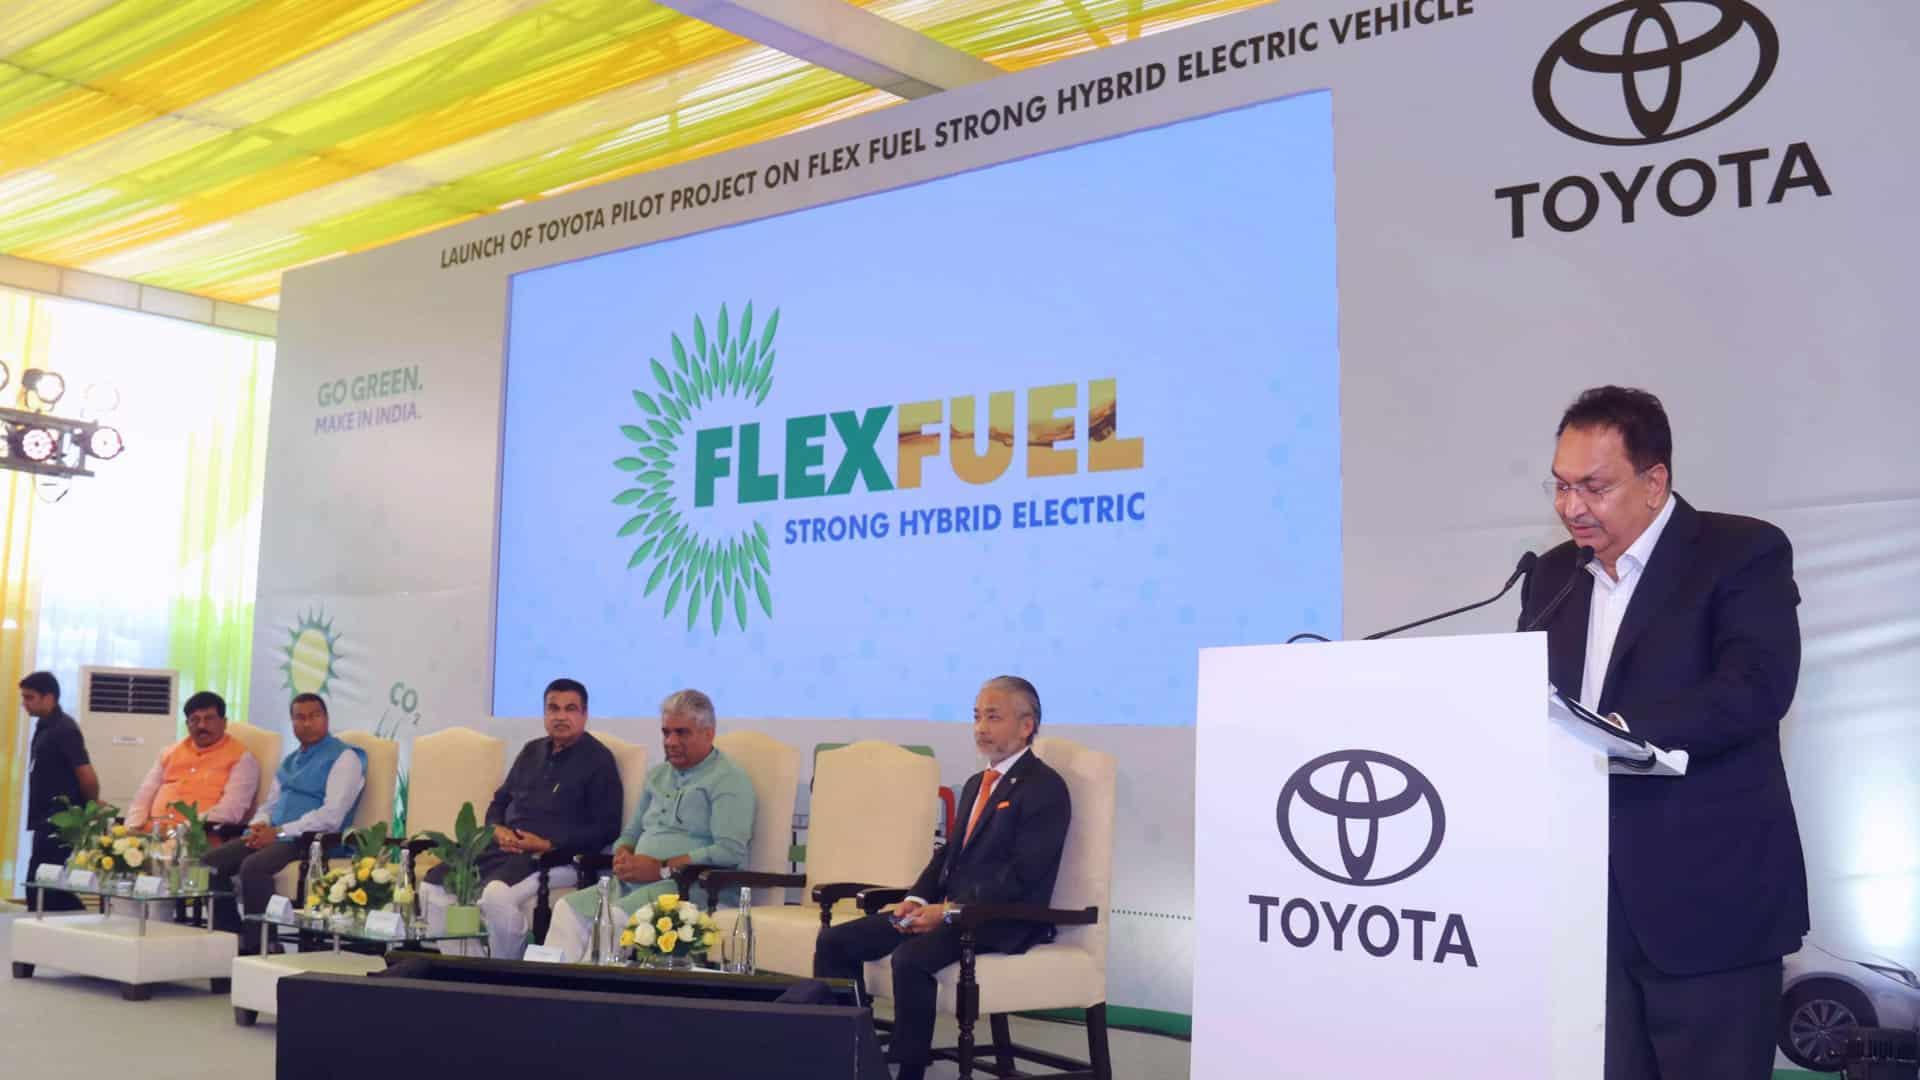 Nitin Gadkari introduces Toyota pilot project on Flex-Fuel Strong Hybrid EV_40.1